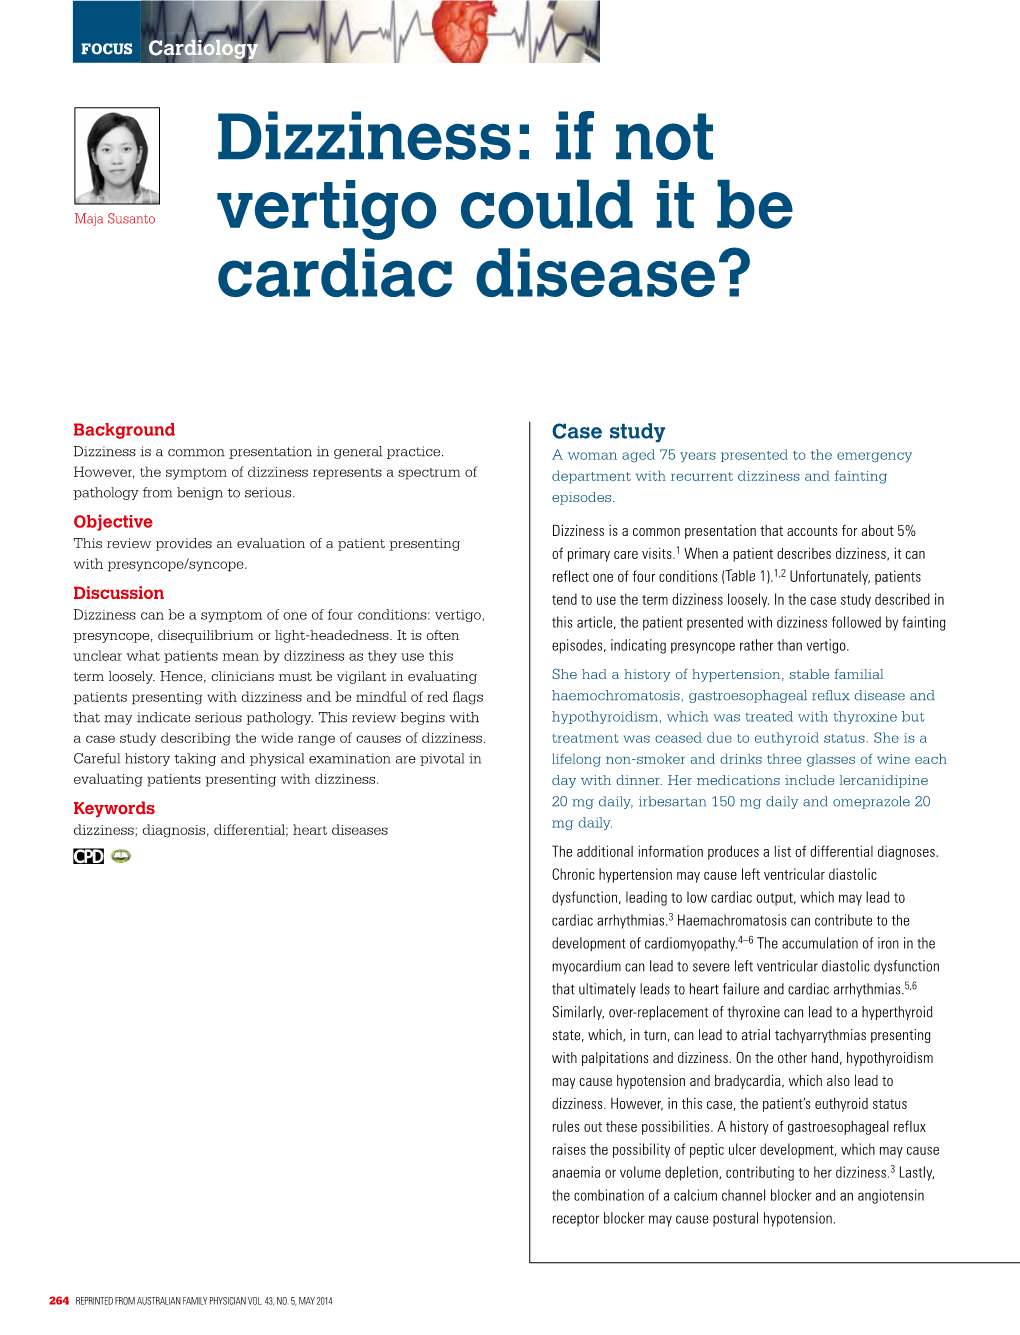 Dizziness: If Not Vertigo Could It Be Cardiac Disease?